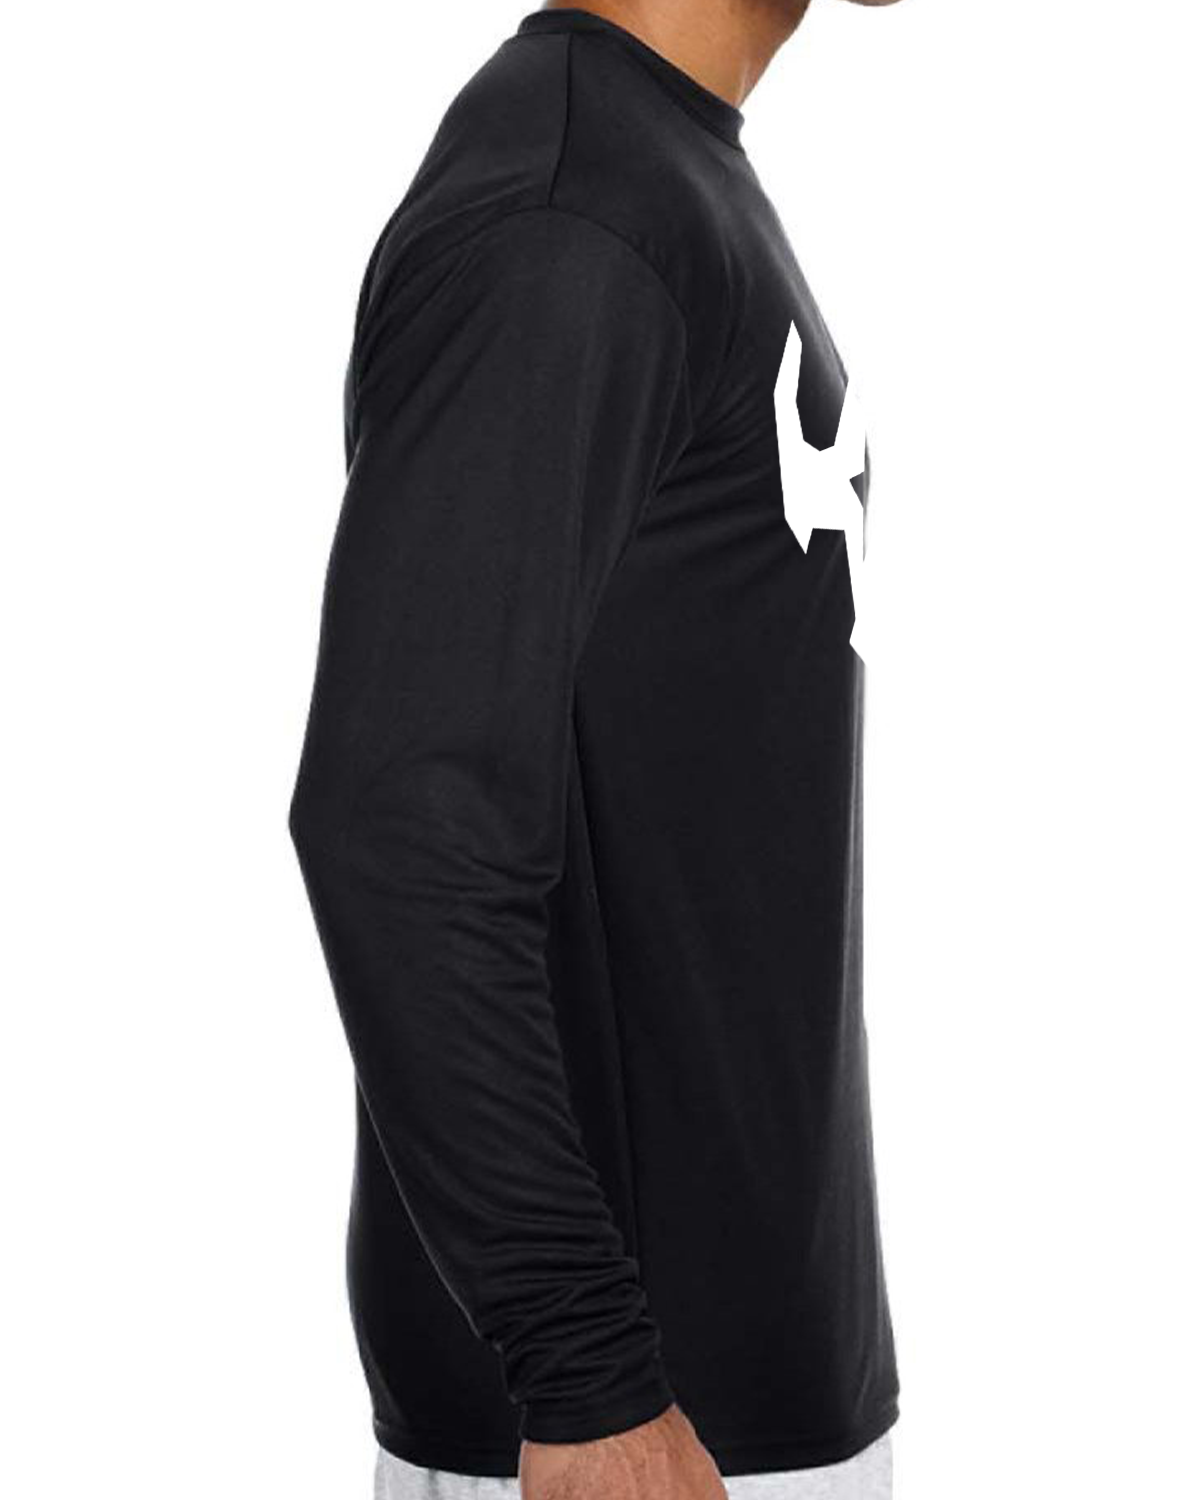 Western Wear Affordable Long Sleeve Long Sleeve High Performance Black VQRO Shirt